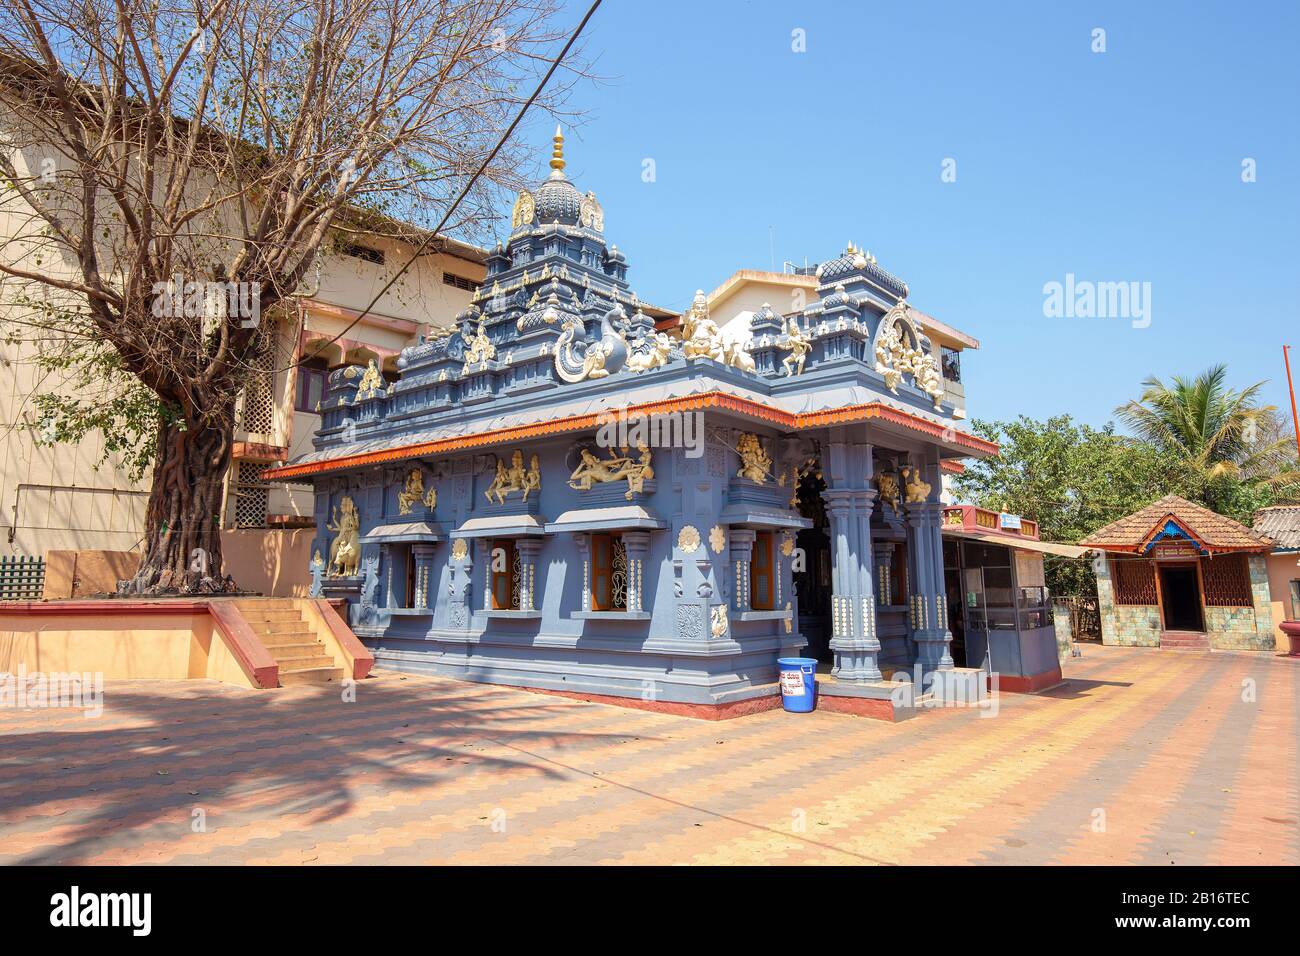 Ein Teil des Tempels des Shri Maarikamba-Tempels in Sirsi Karnataka, Indien. Stockfoto